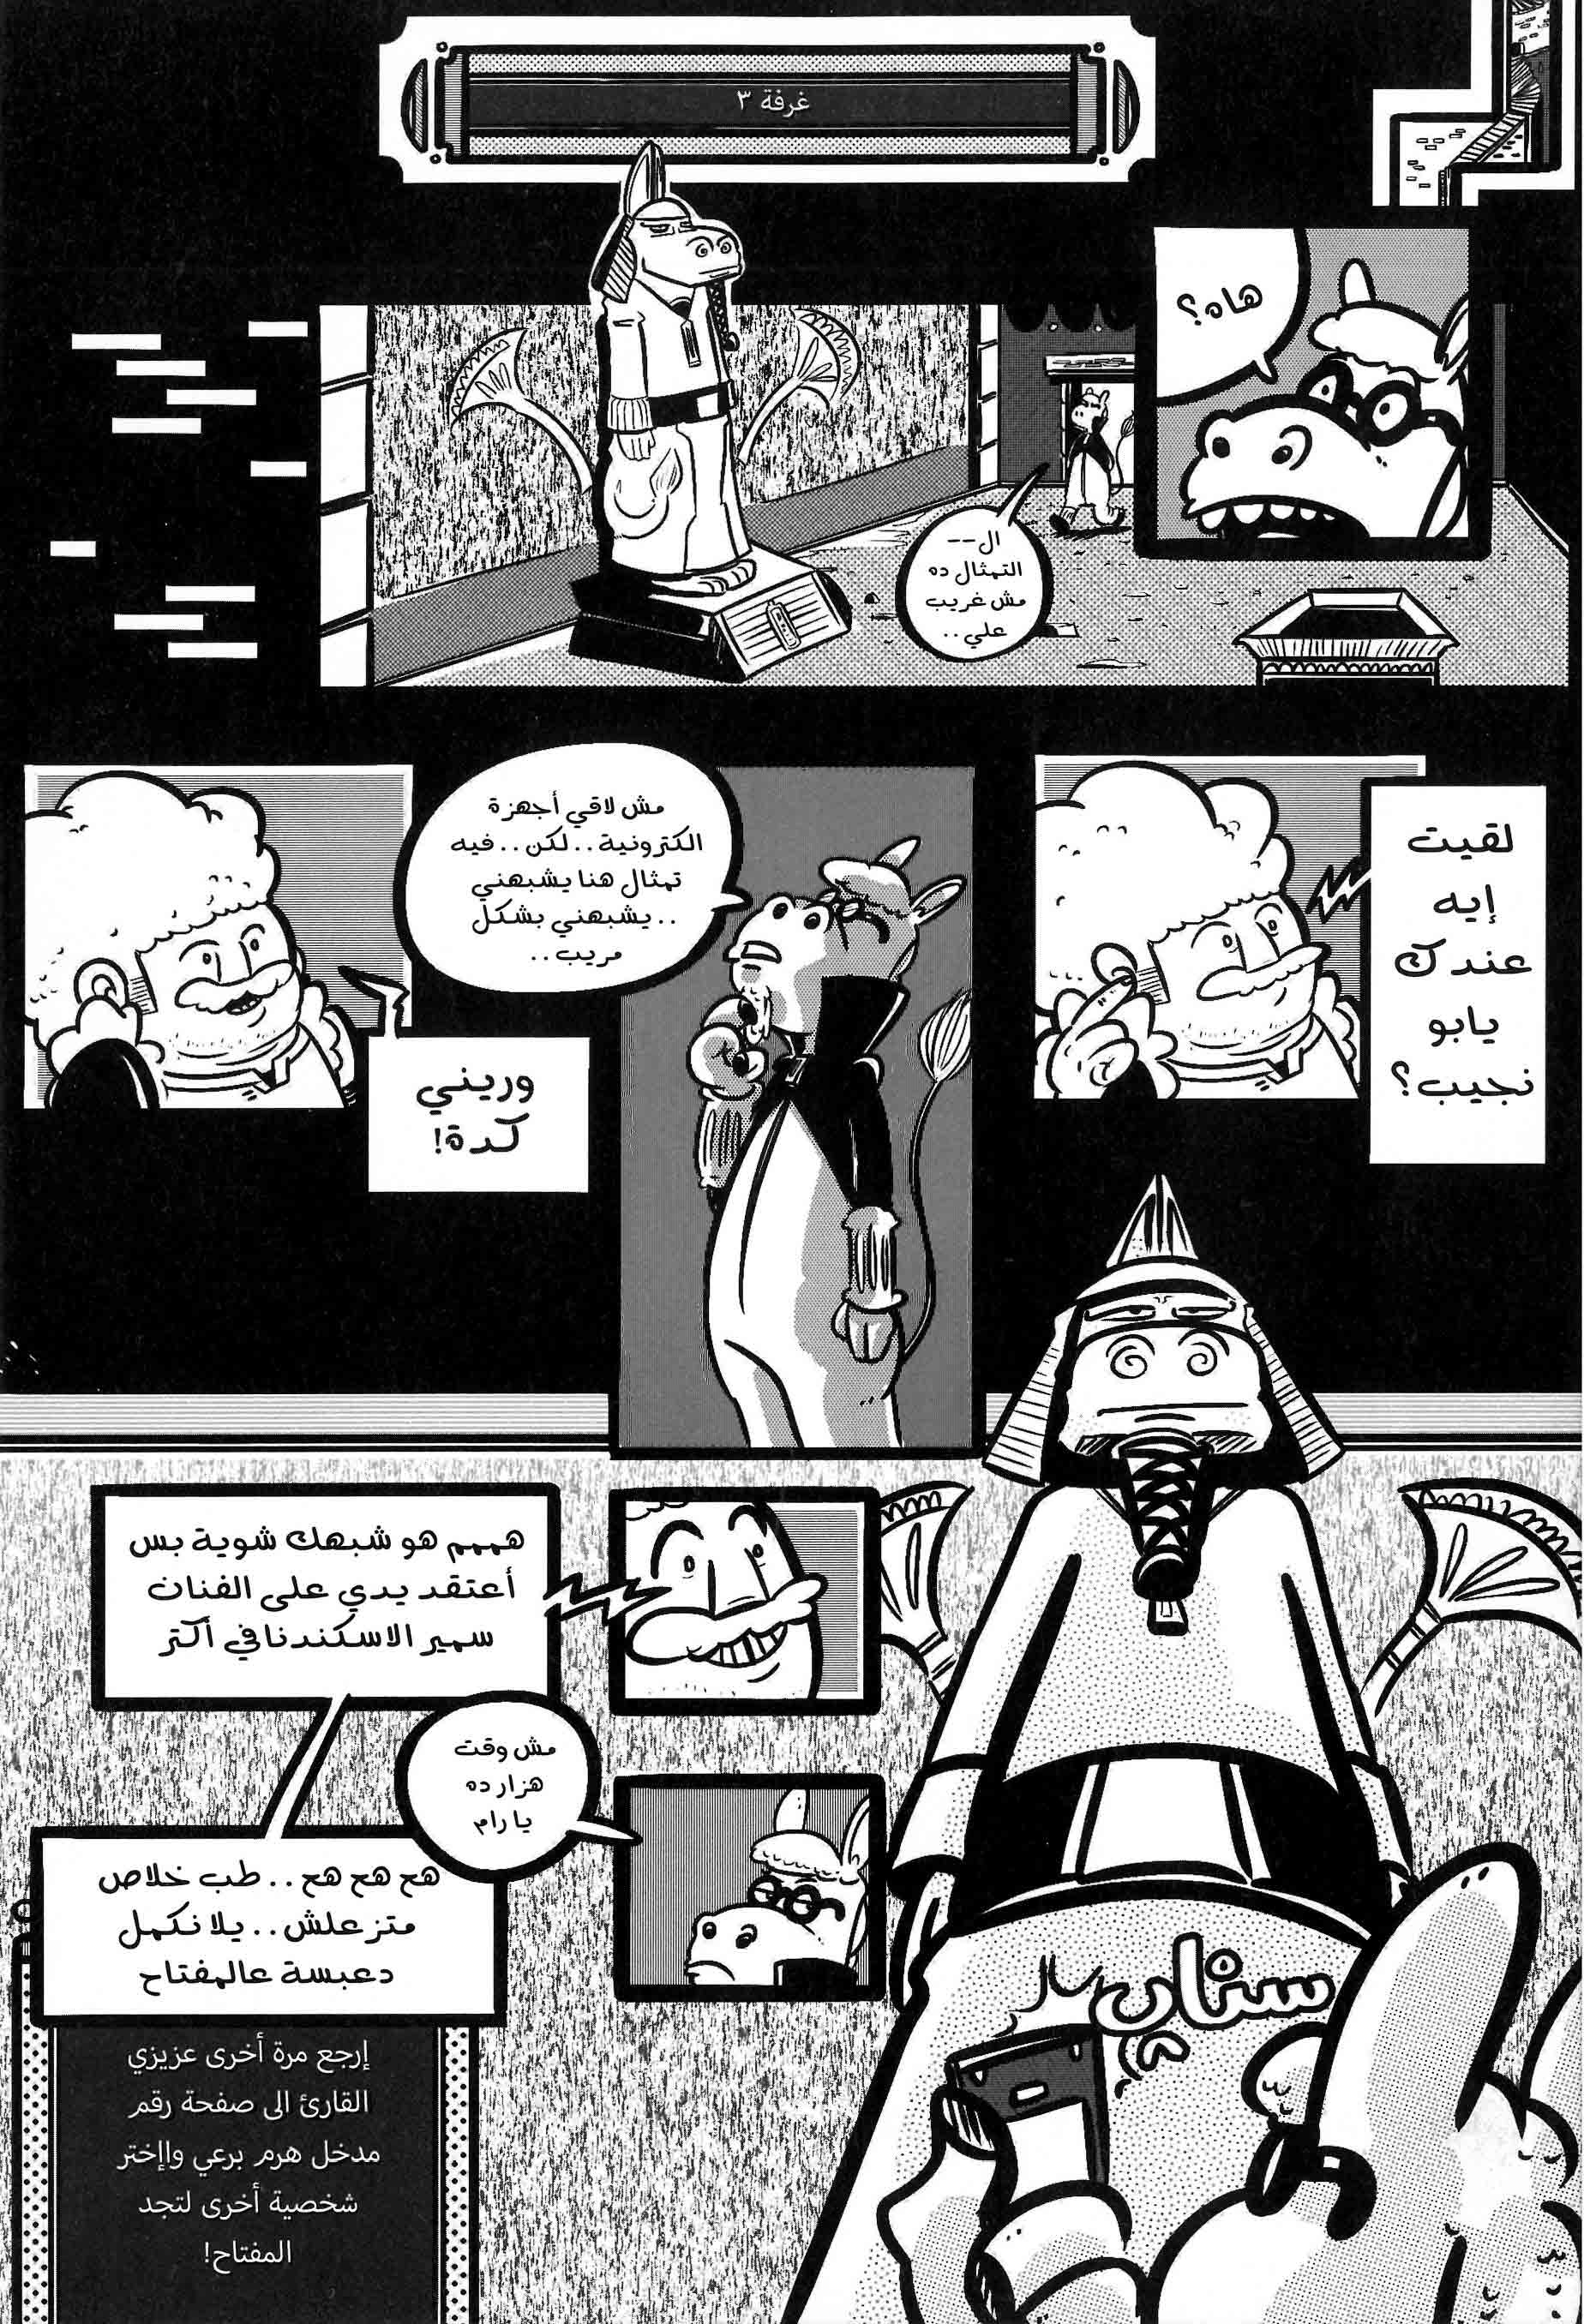 comics_artists_in_the_arab_countries_6.jpg